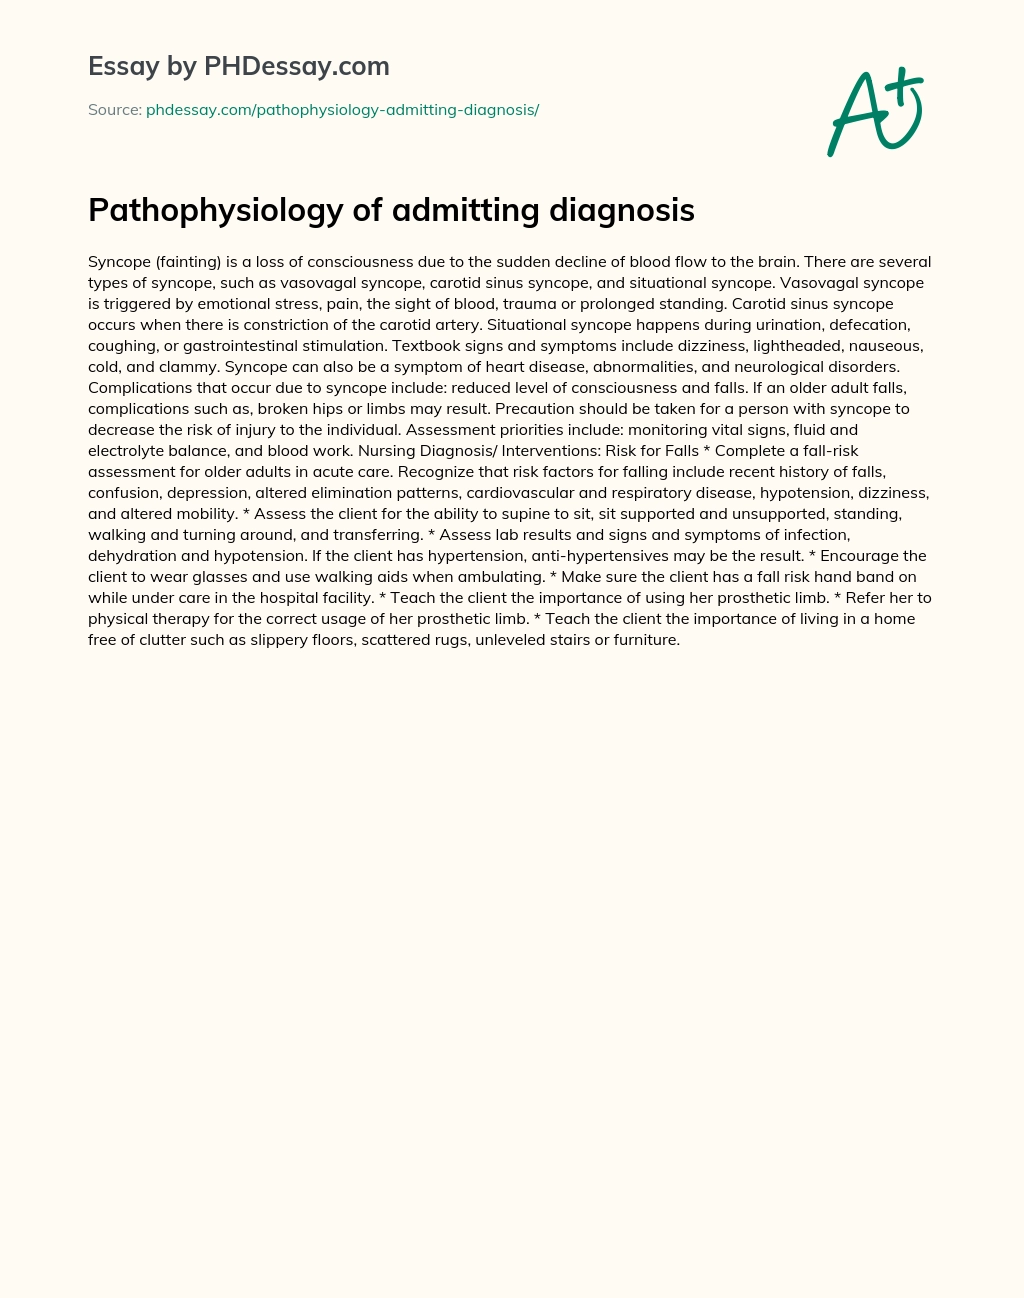 Pathophysiology of admitting diagnosis essay